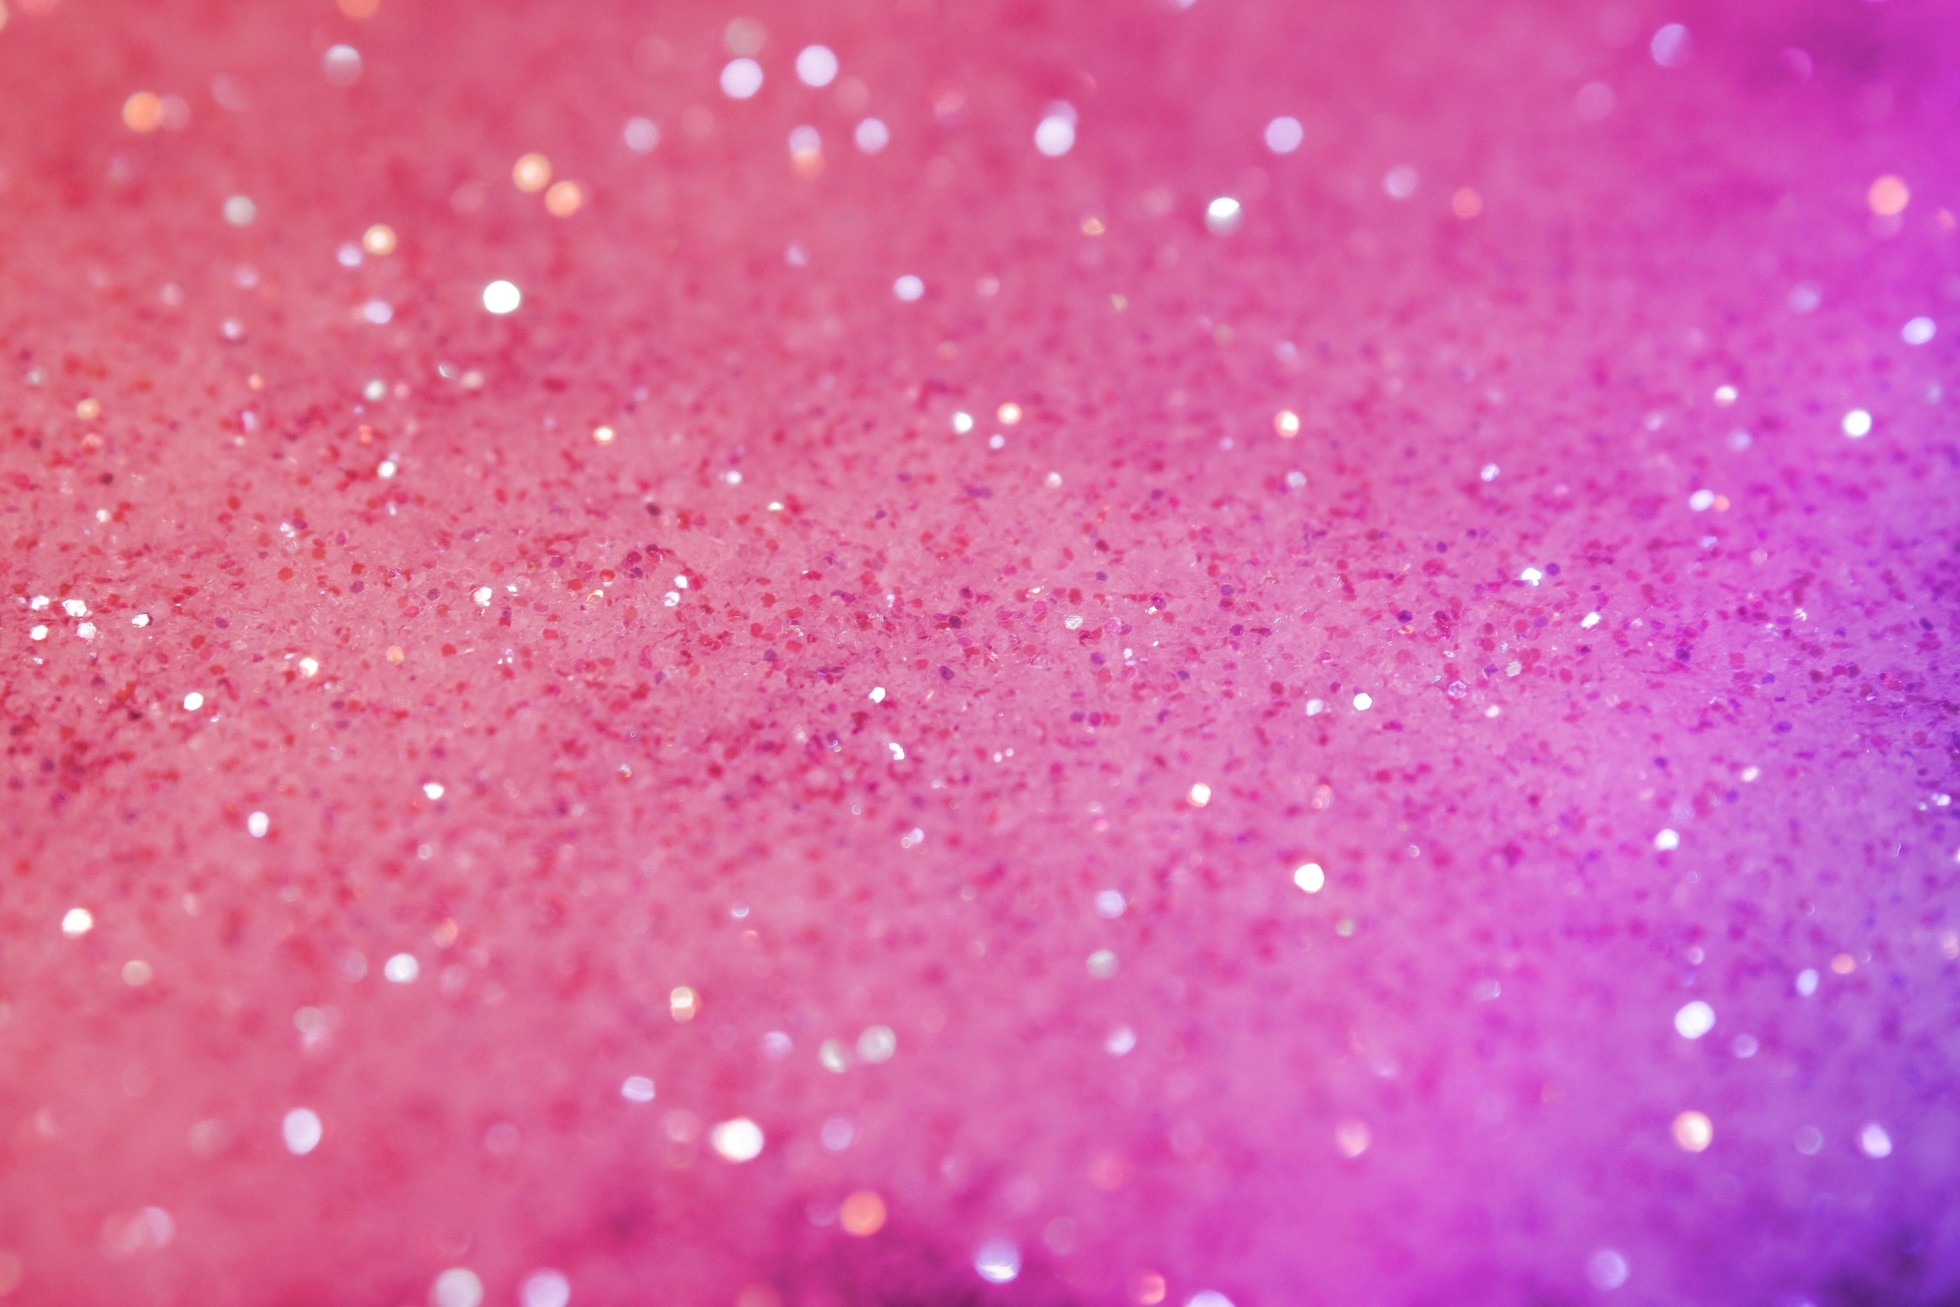 1960x1307 Pink Glitter Image Desktop Background HD Wallpapers Widescreen Free Download